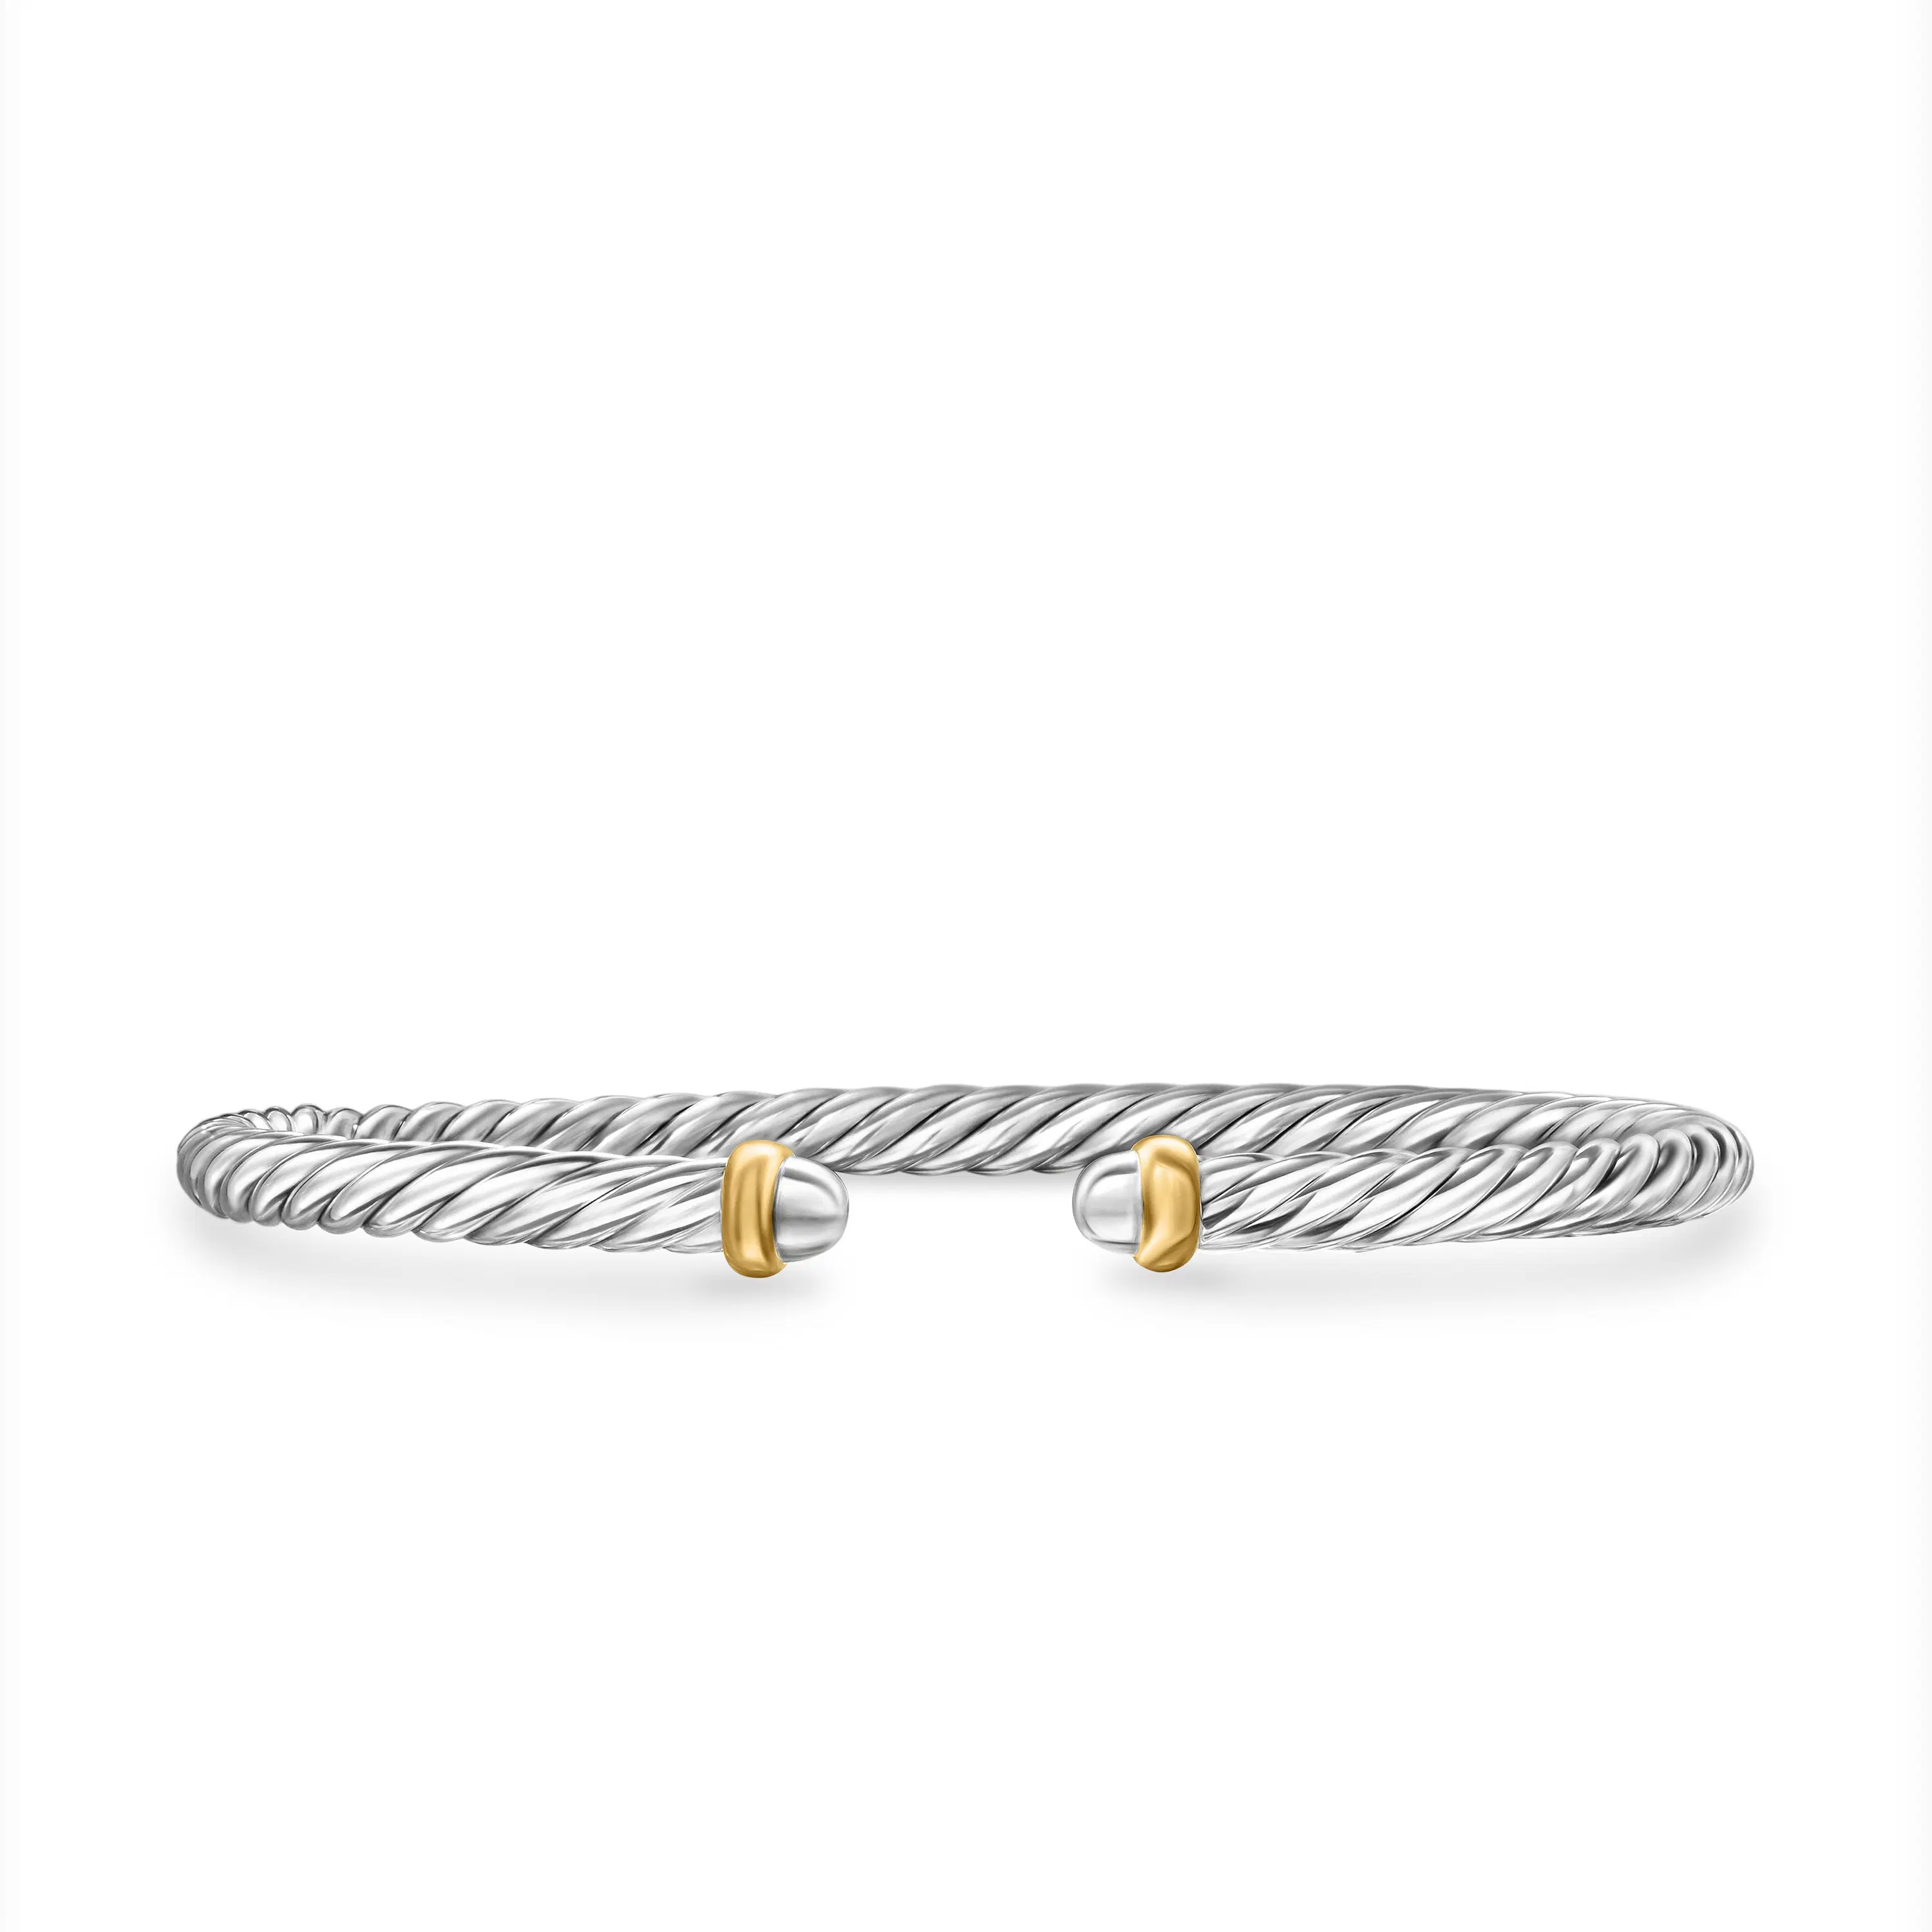 David Yurman Sterling Silver Cable Flex Bracelet with Gold, Size Large 0